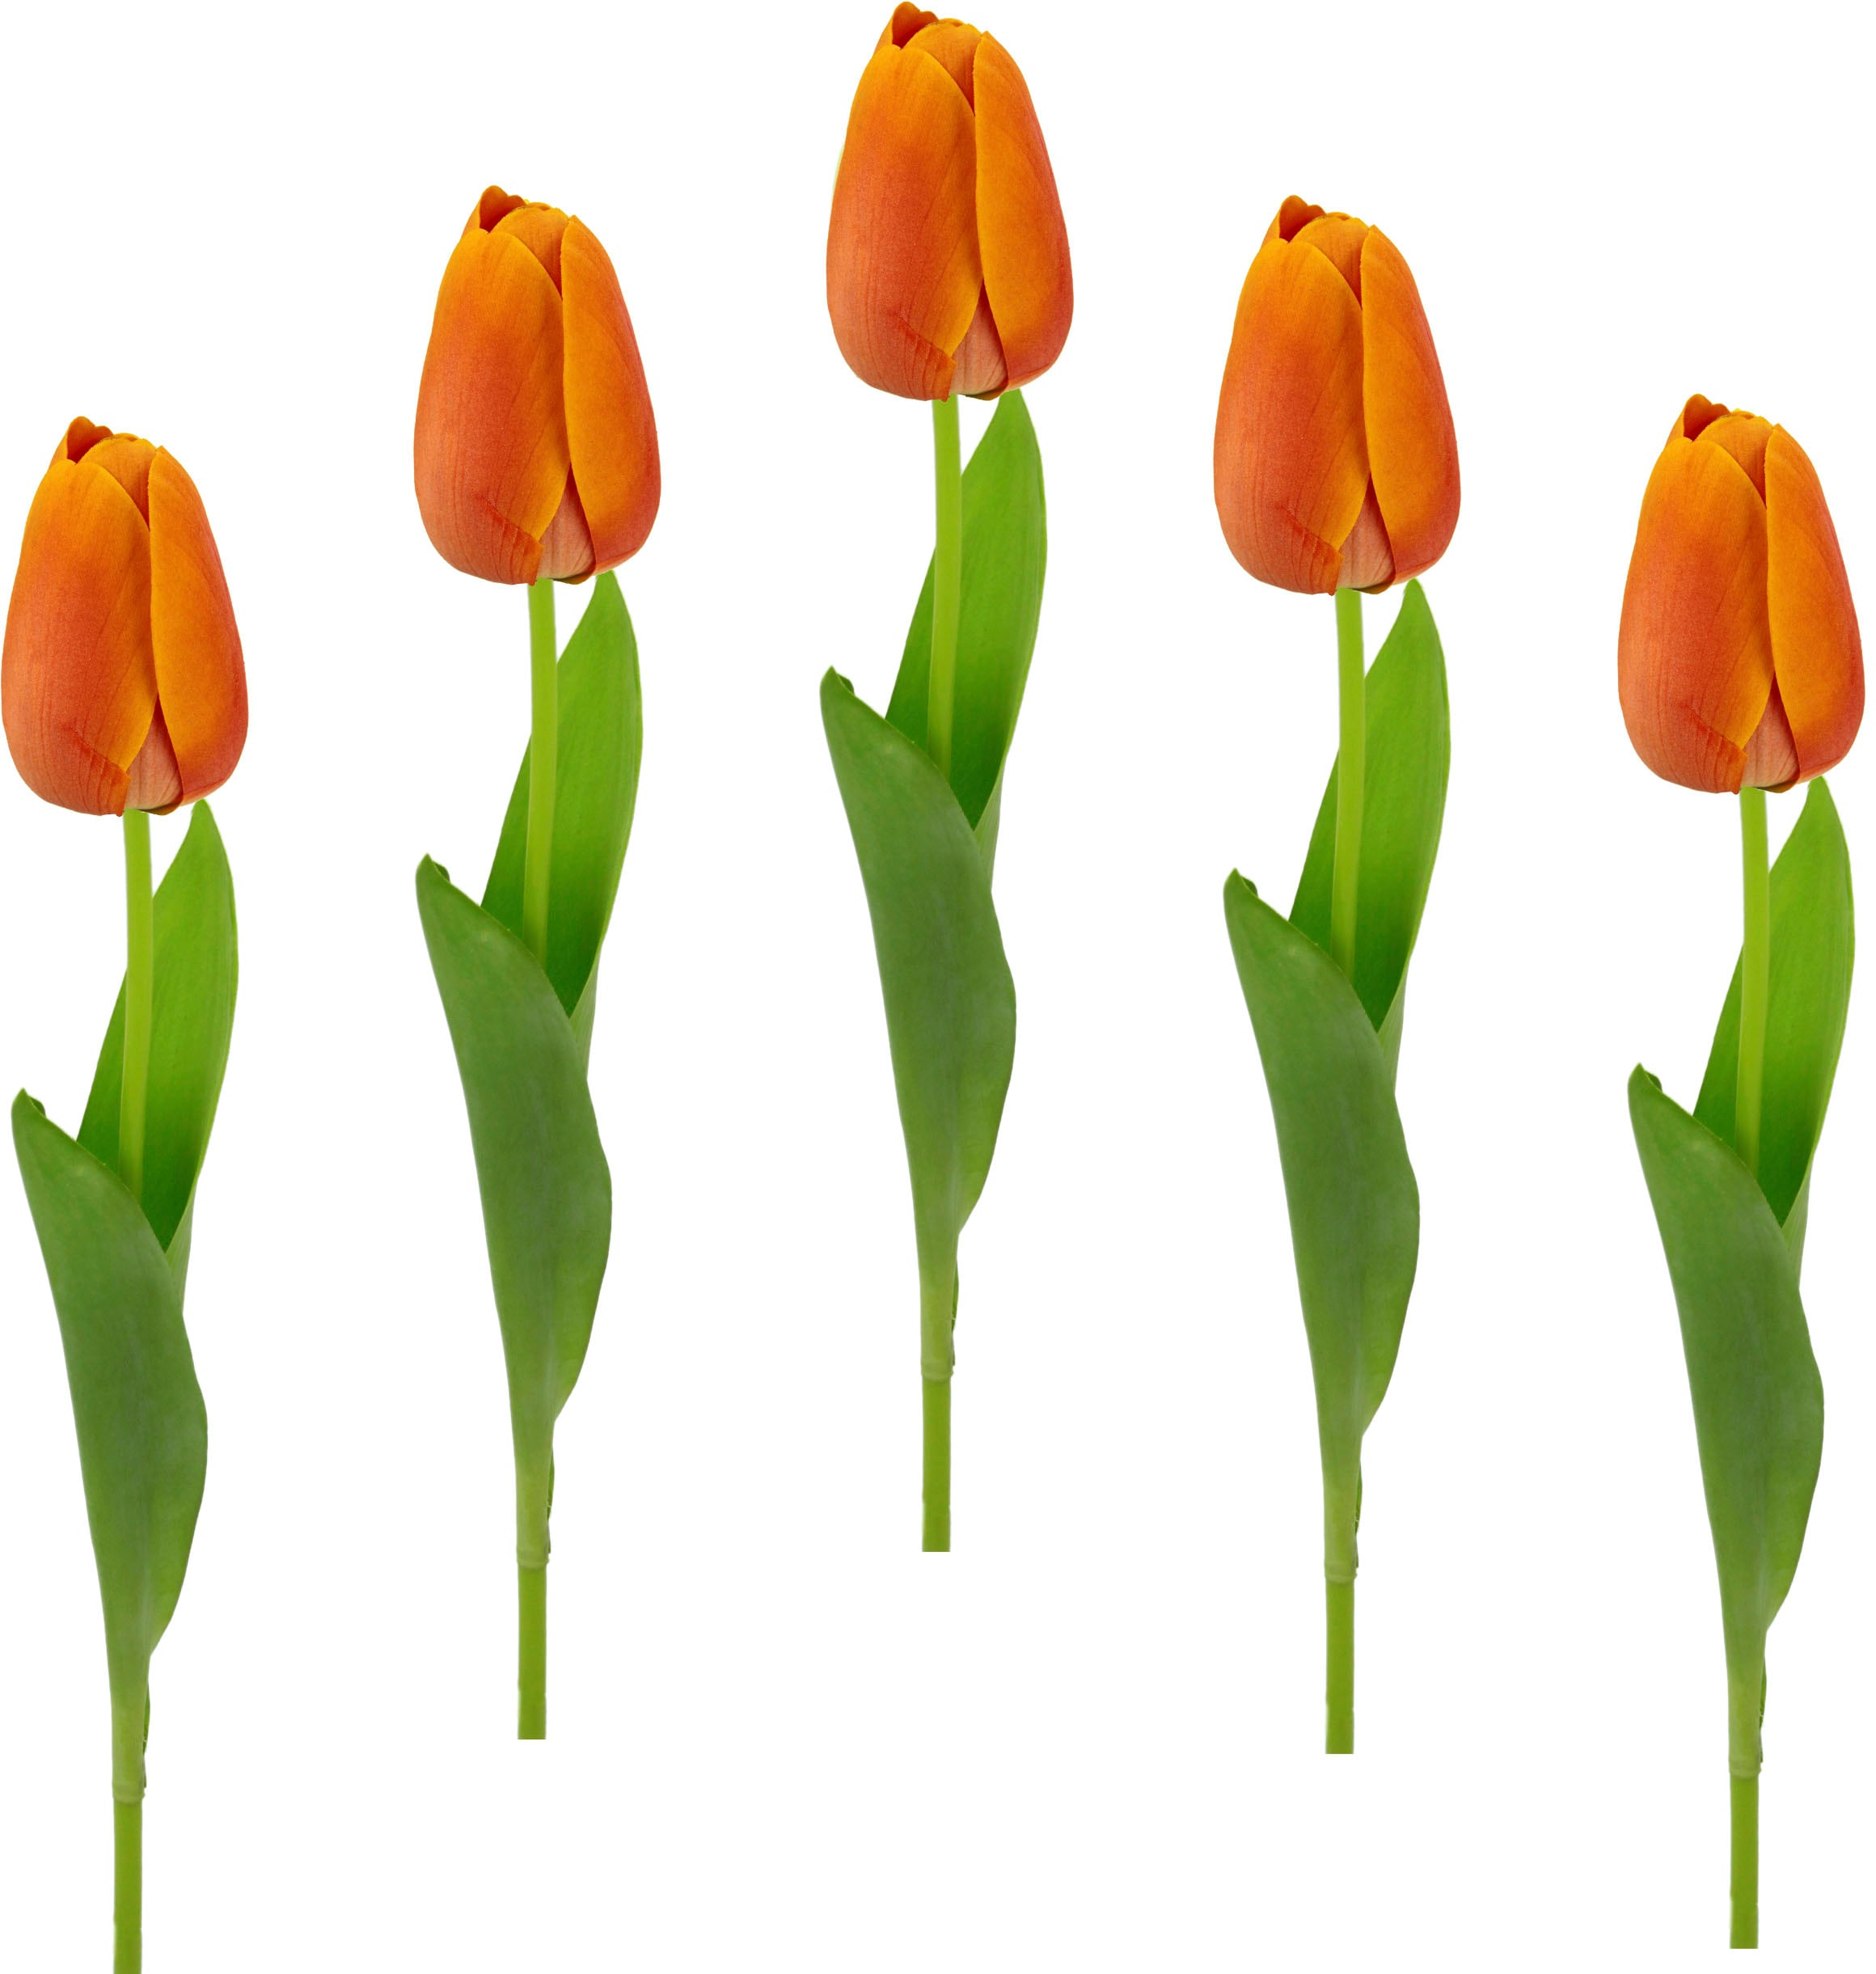 I.GE.A. Kunstblume Tulpen«, kaufen 5er »Real Stielblume Touch jetzt künstliche Tulpenknospen, Kunstblumen, Set